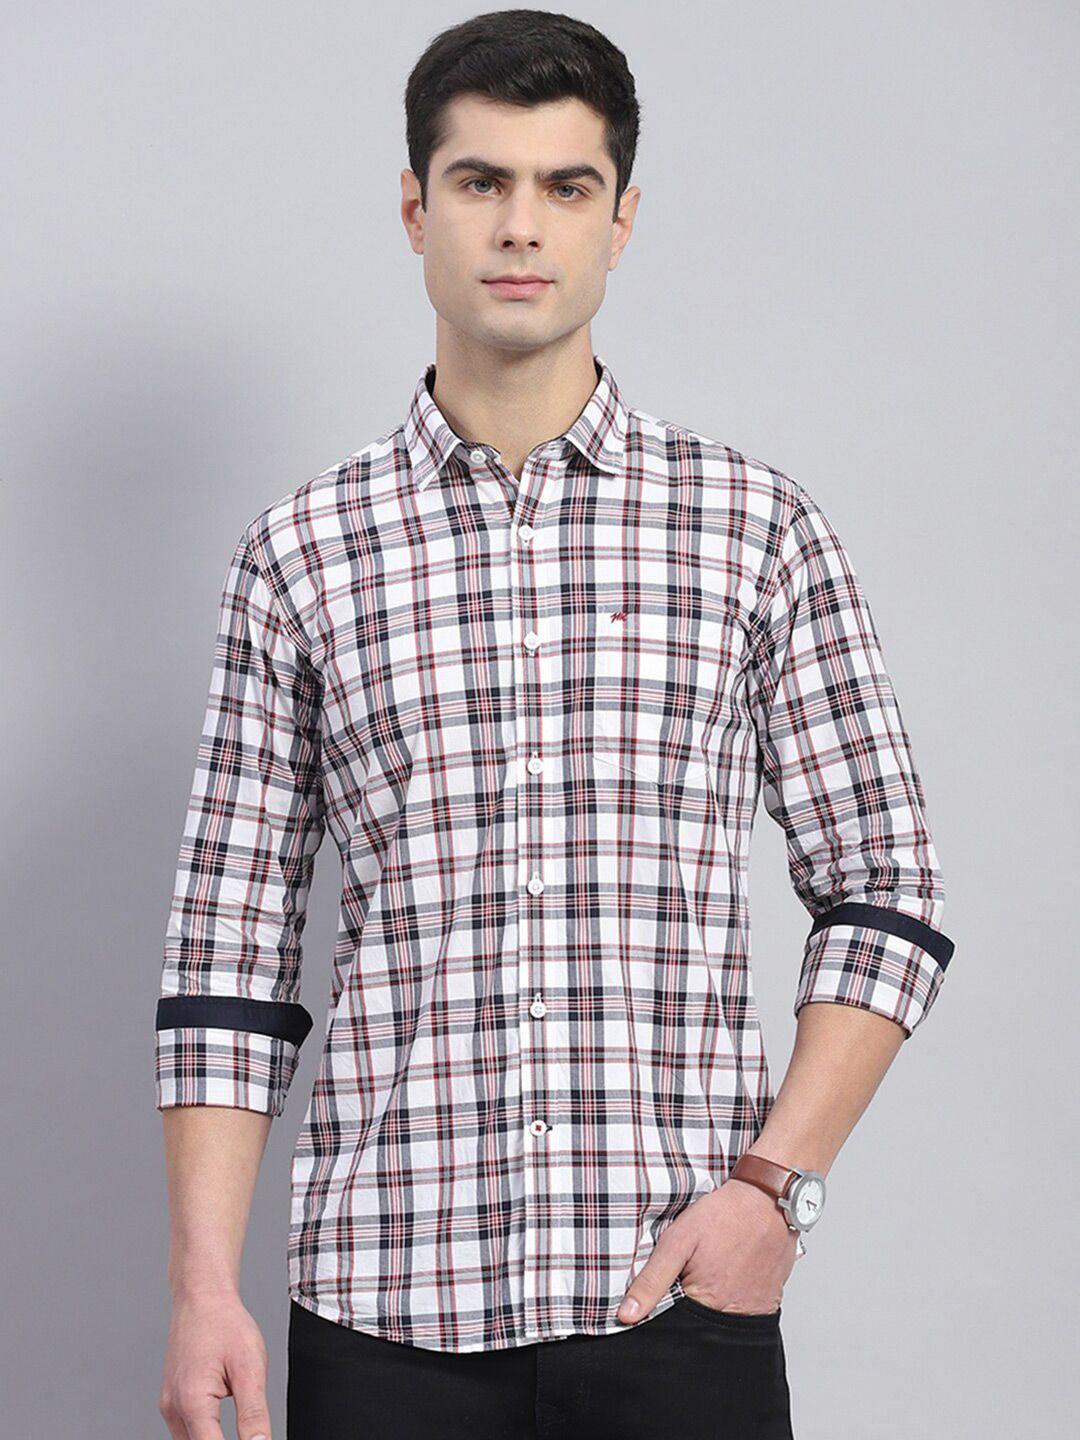 monte-carlo-classic-tartan-checked-pure-cotton-casual-shirt